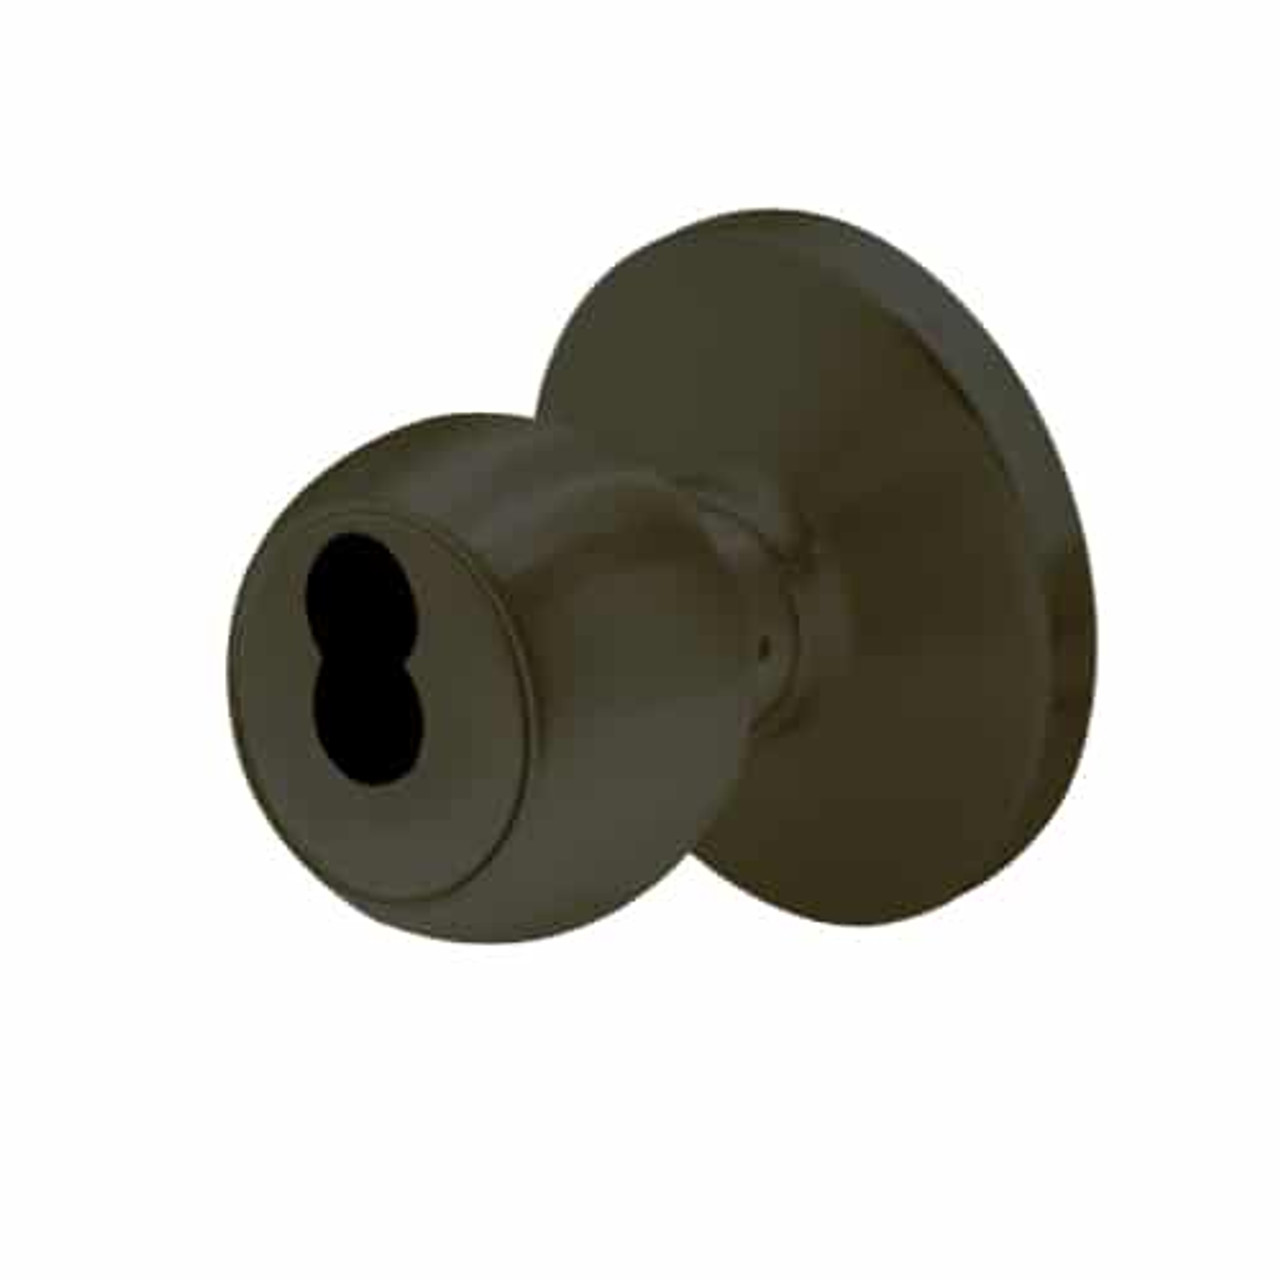 6K27D4DSTK613 Best 6K Series Medium Duty Storeroom Cylindrical Knob Locks with Round Style in Oil Rubbed Bronze